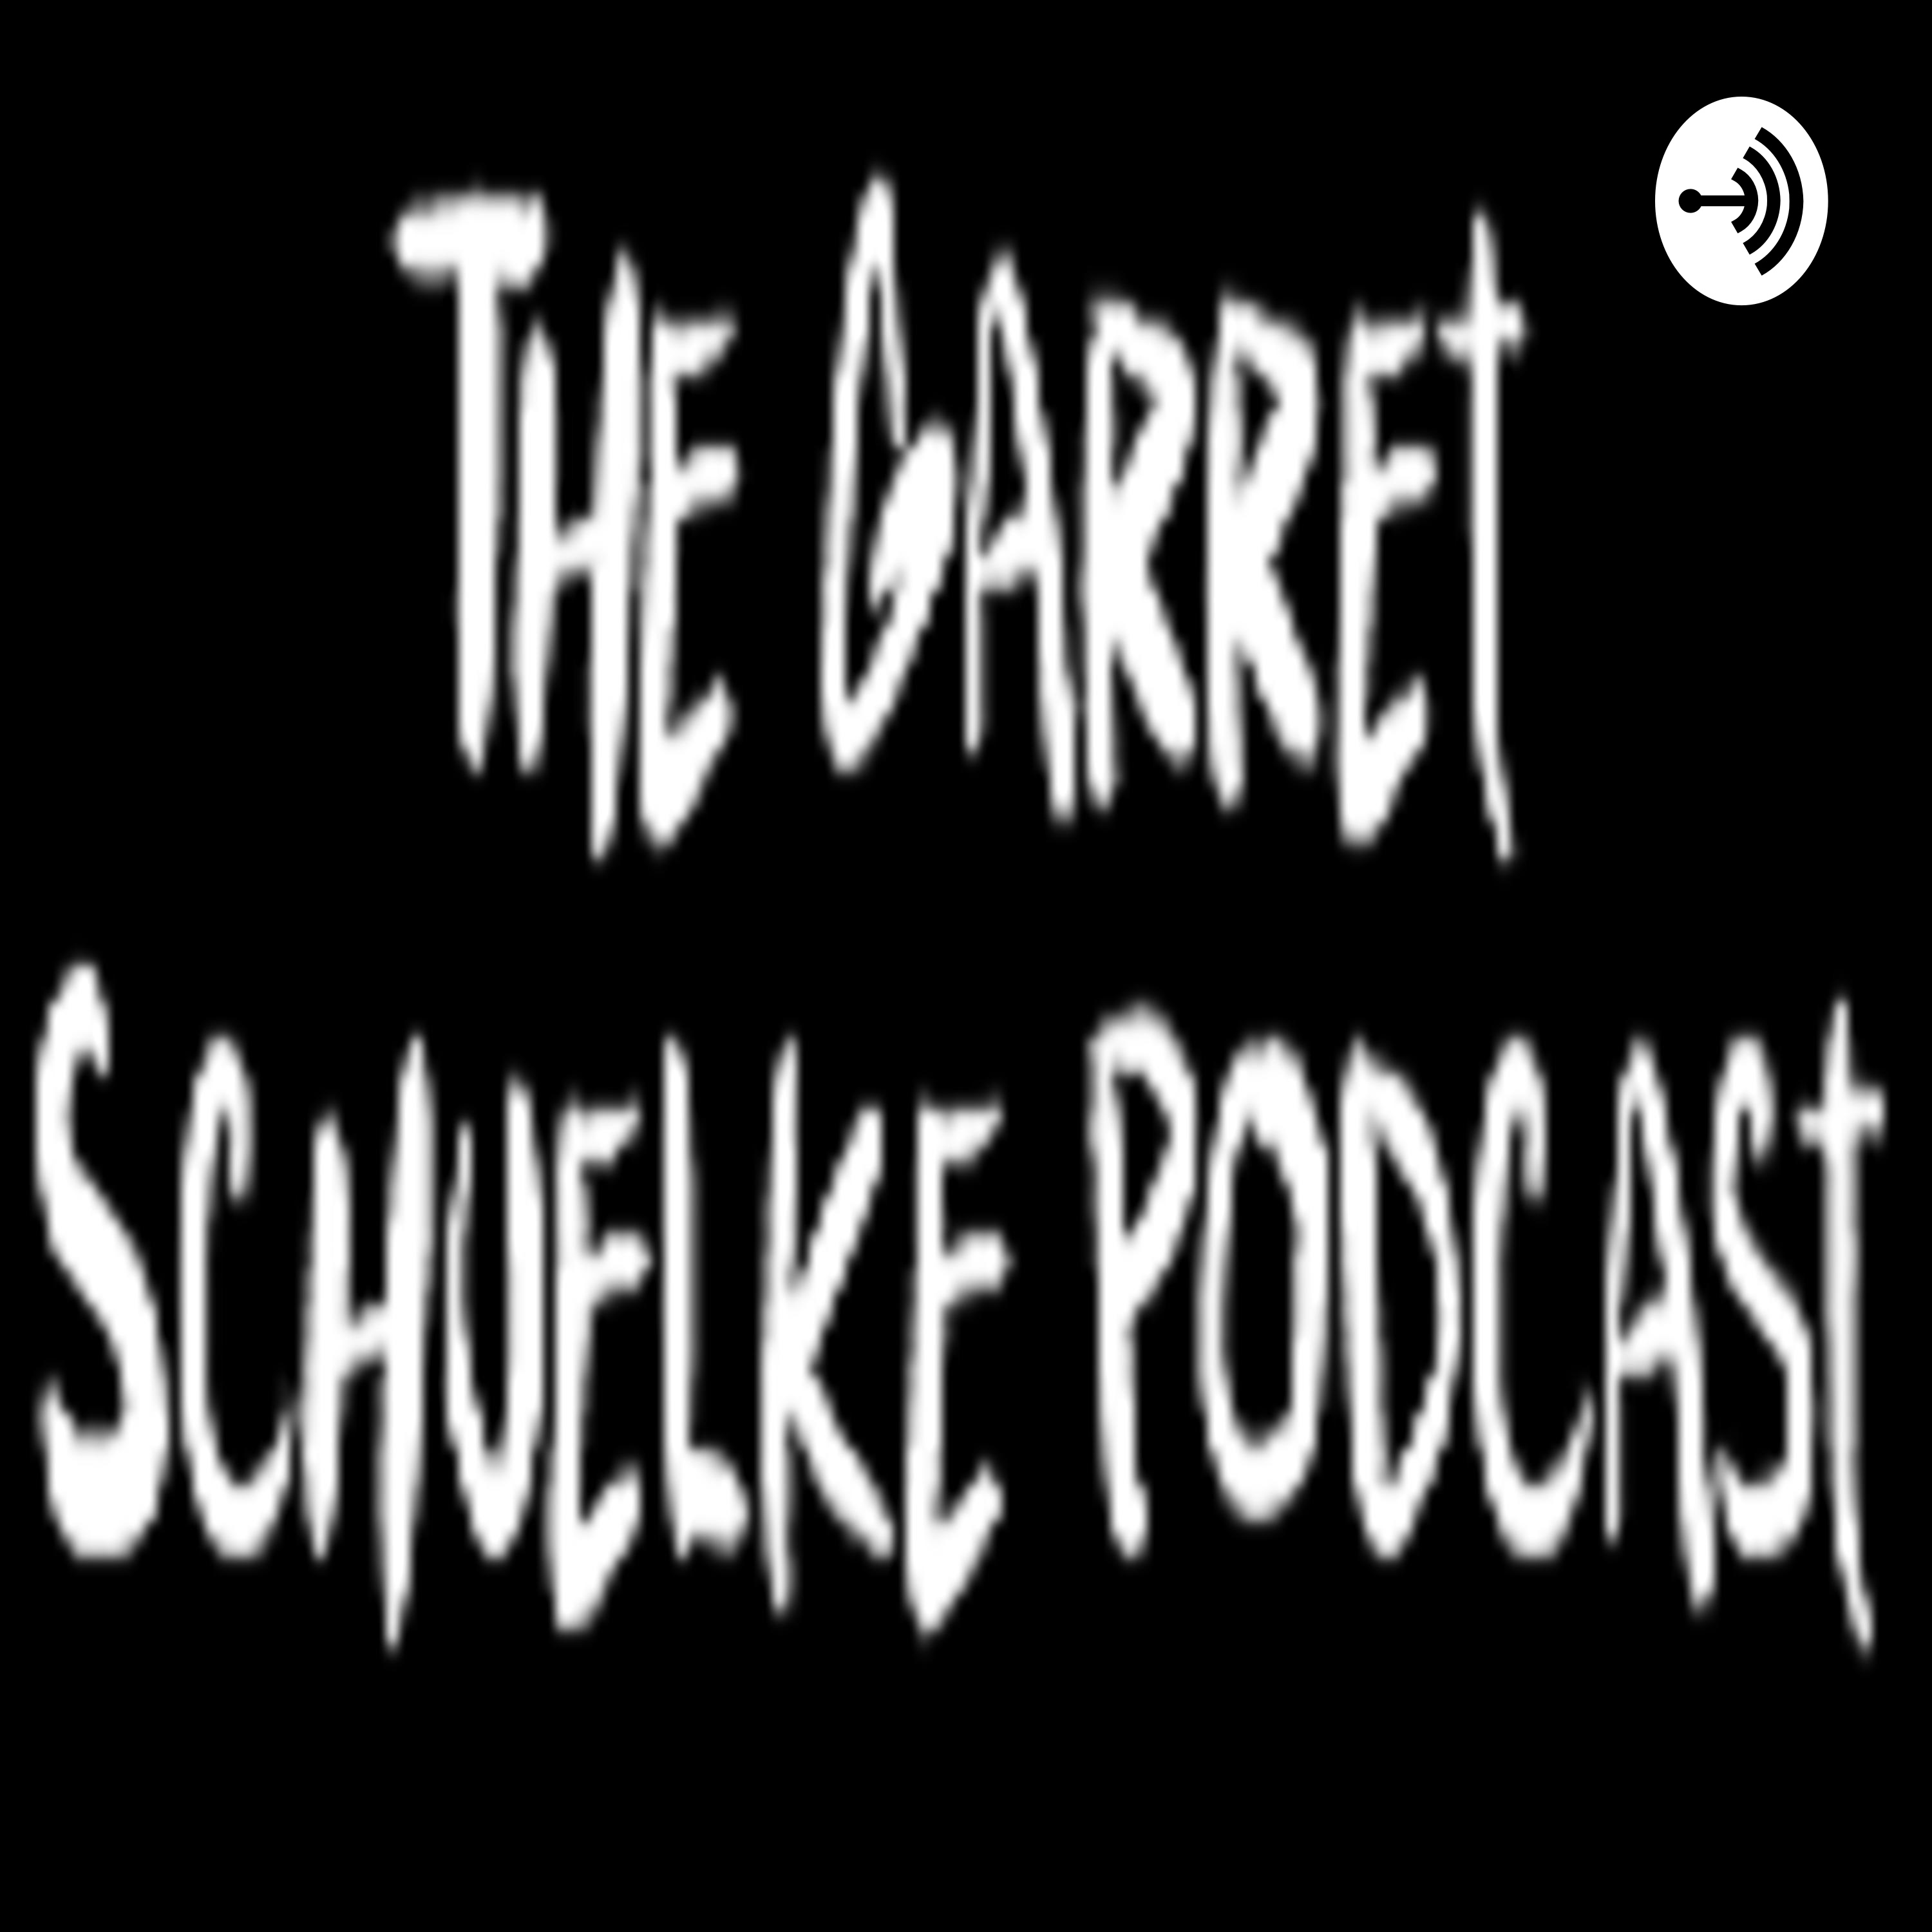 The Garret Schuelke Podcast Episode 53: Super Rush! with Jake Flores